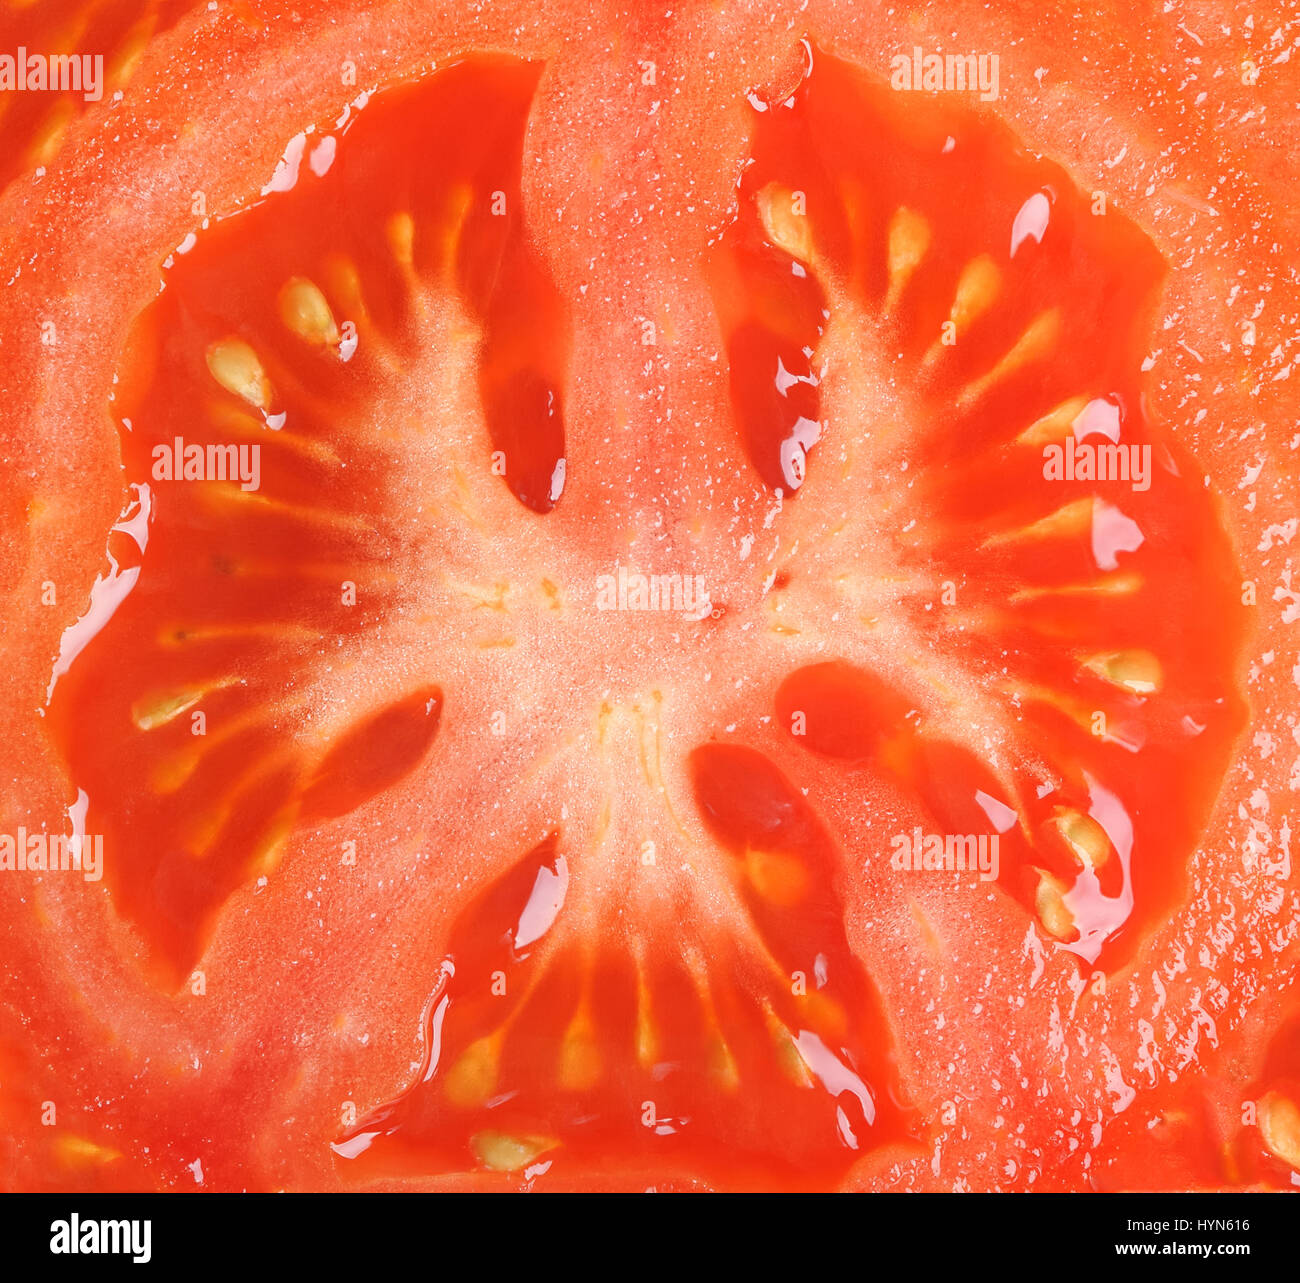 Slice of tomato as background Stock Photo